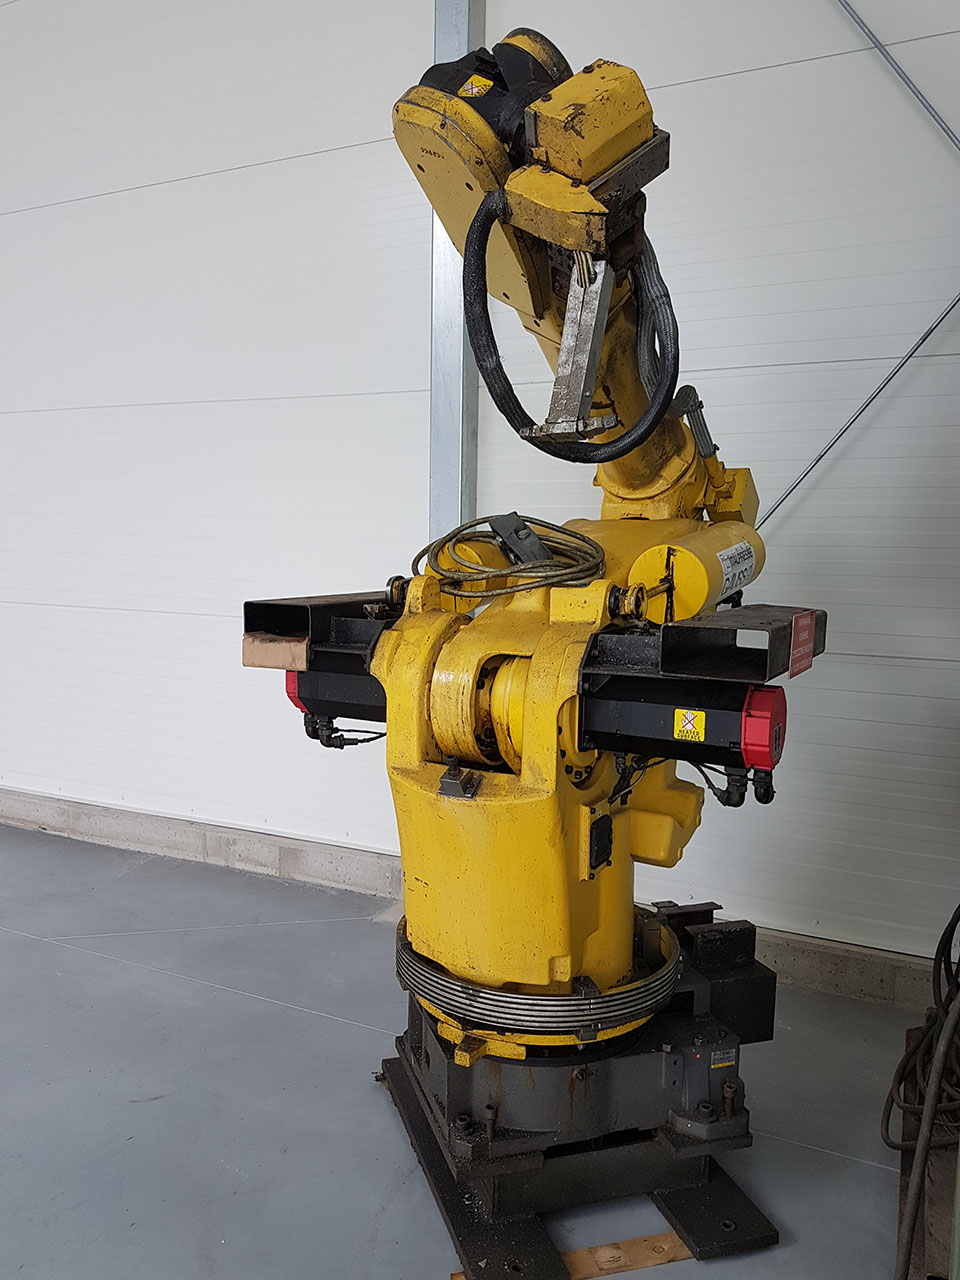 FANUC S-420 i F robot per fonderia, usato HR1815